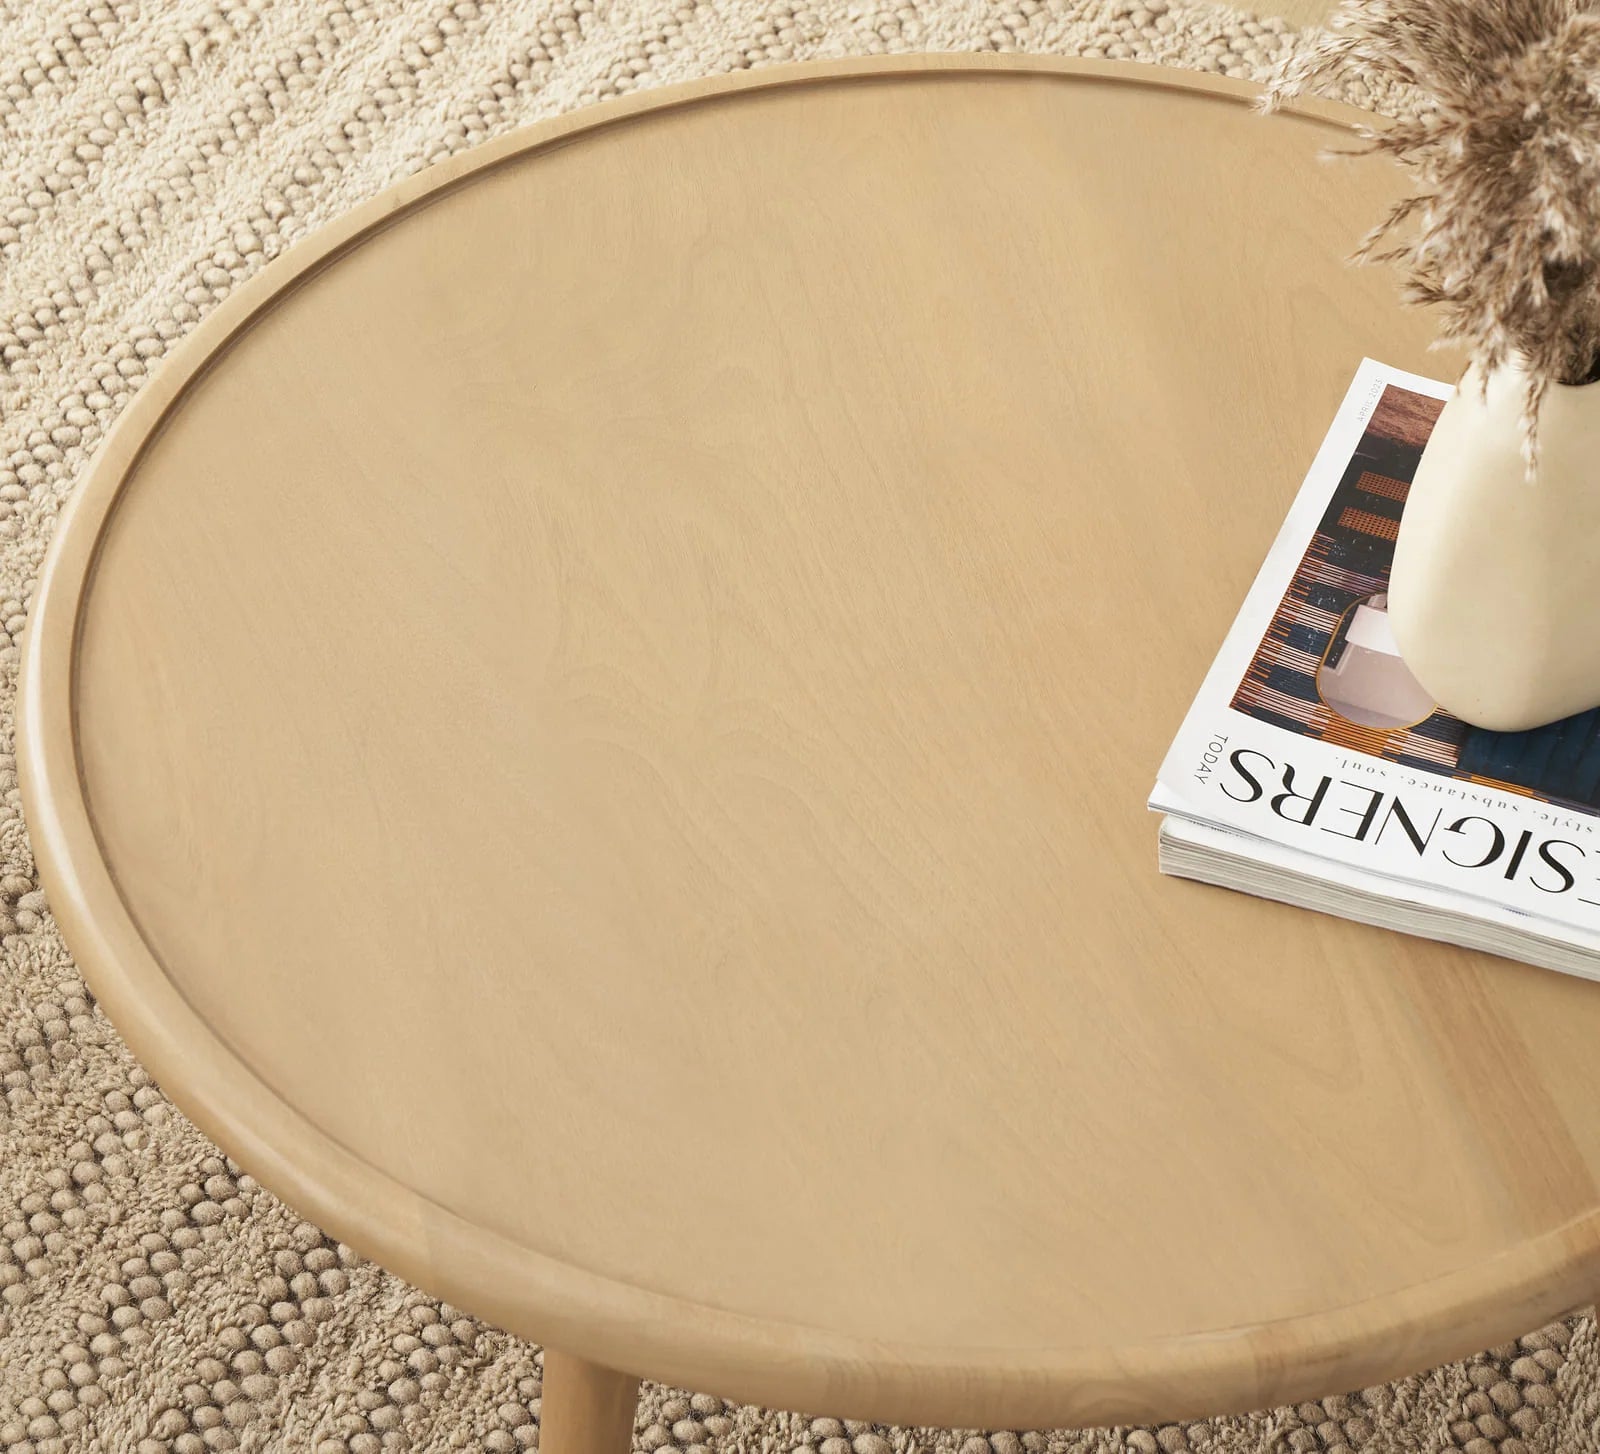 Oslo Scandinavian Oak solid wood round coffee table | malletandplane.com